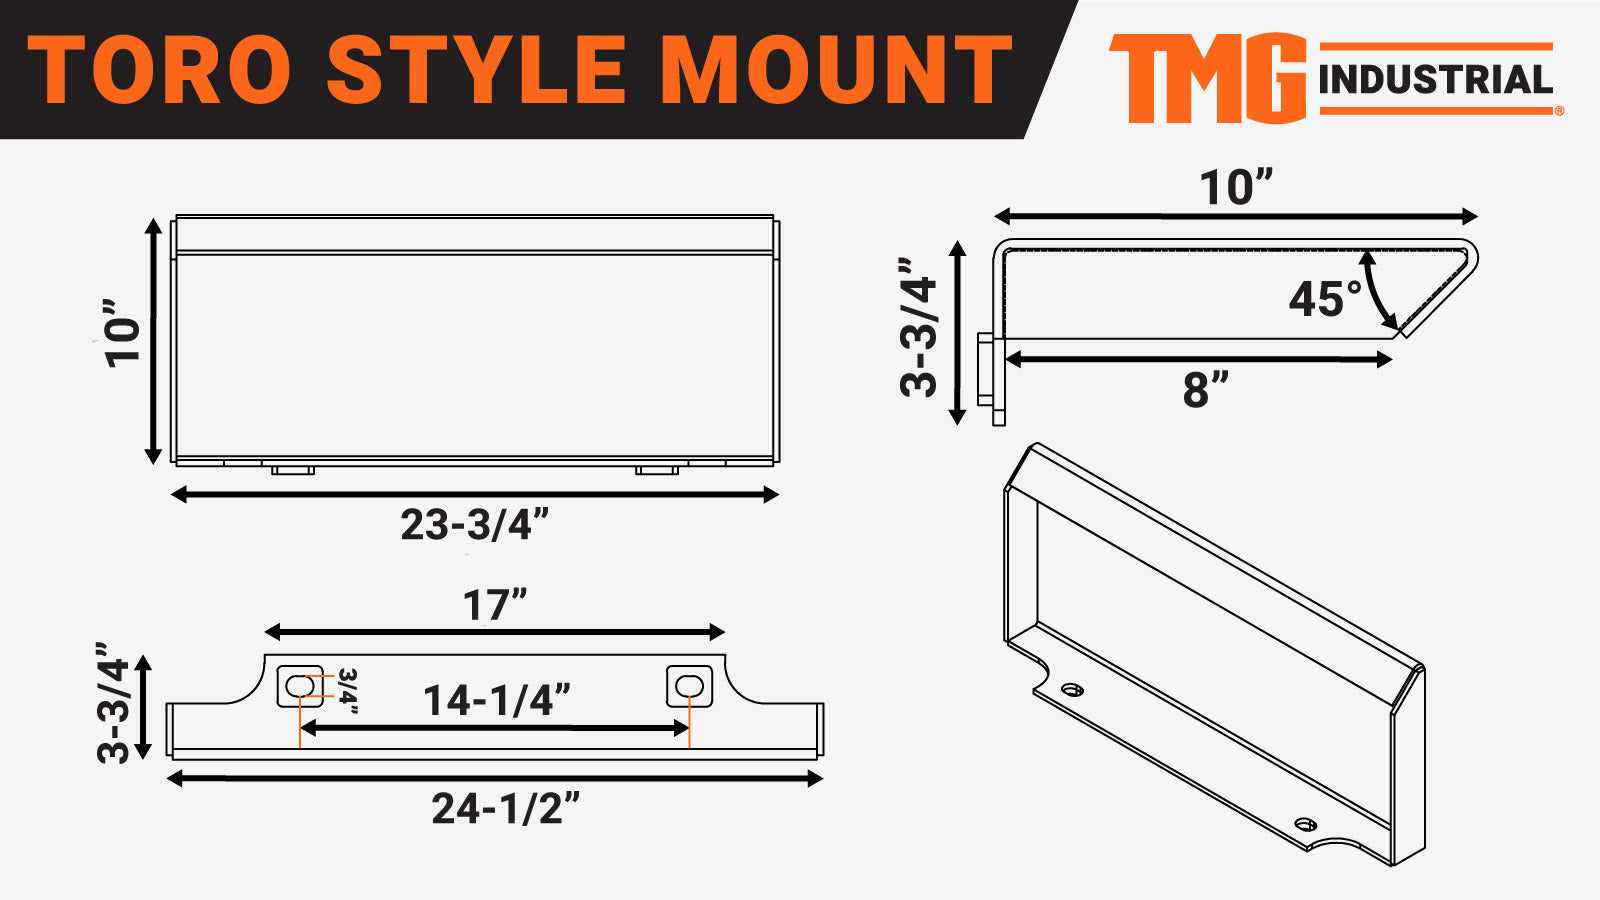 TMG Industrial Mini Skid Steer Rotary Brush Cutter, 42” Cut Width, 2-½” Capacity, Hydraulic Motor, Toro Style Mount Plate,TMG-SBC42-description-image